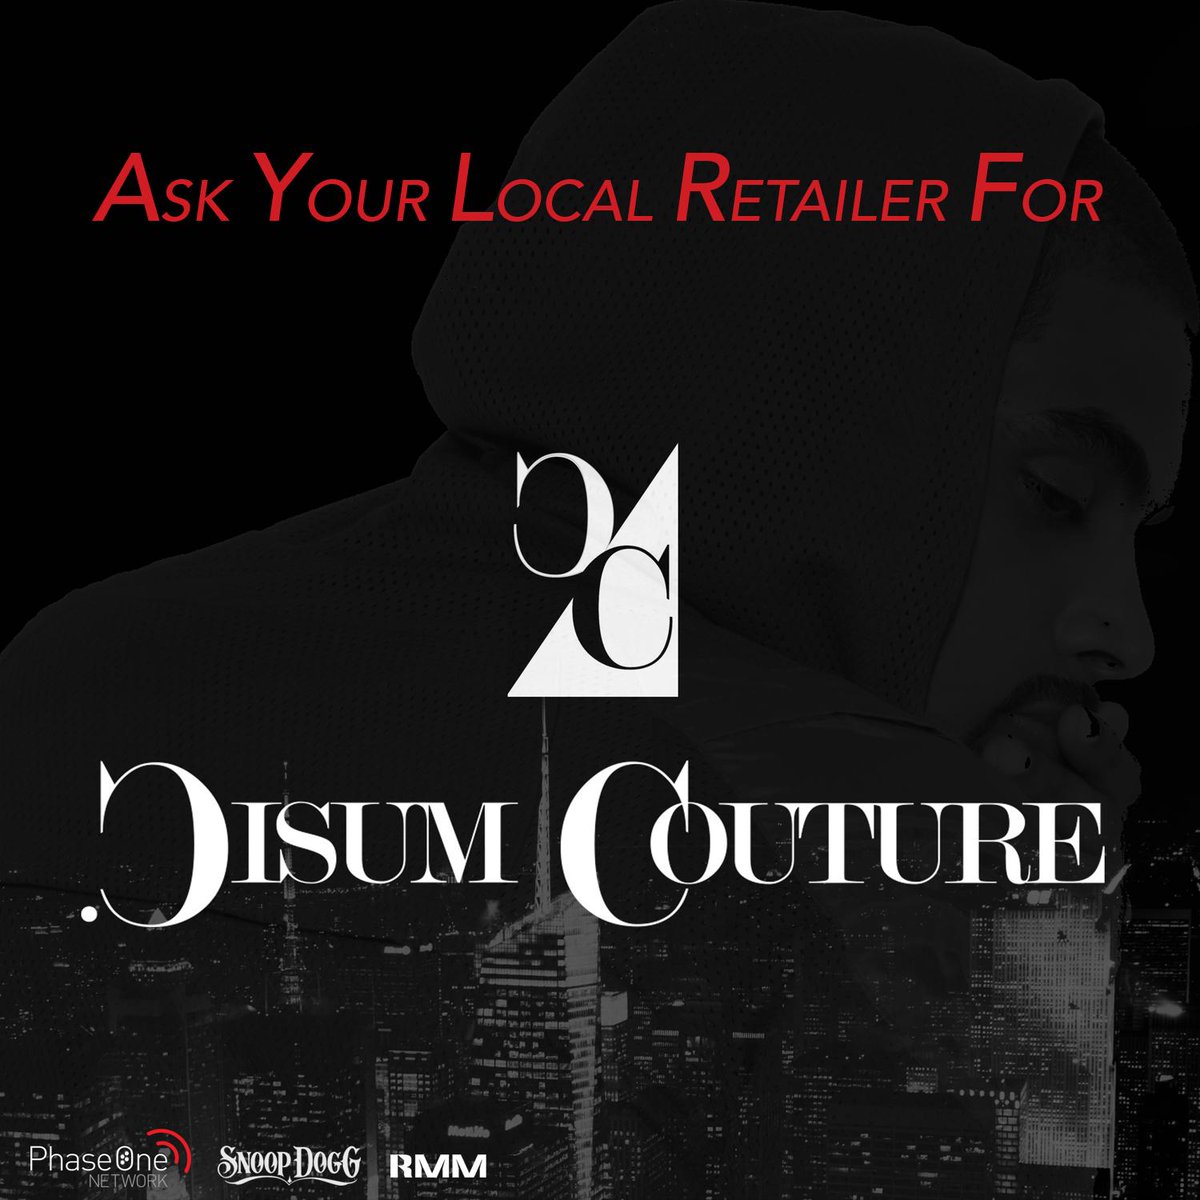 Cisum couture !! #CisumCouture @taliacoles #cobbtradeshow http://t.co/ty0XOCnE78